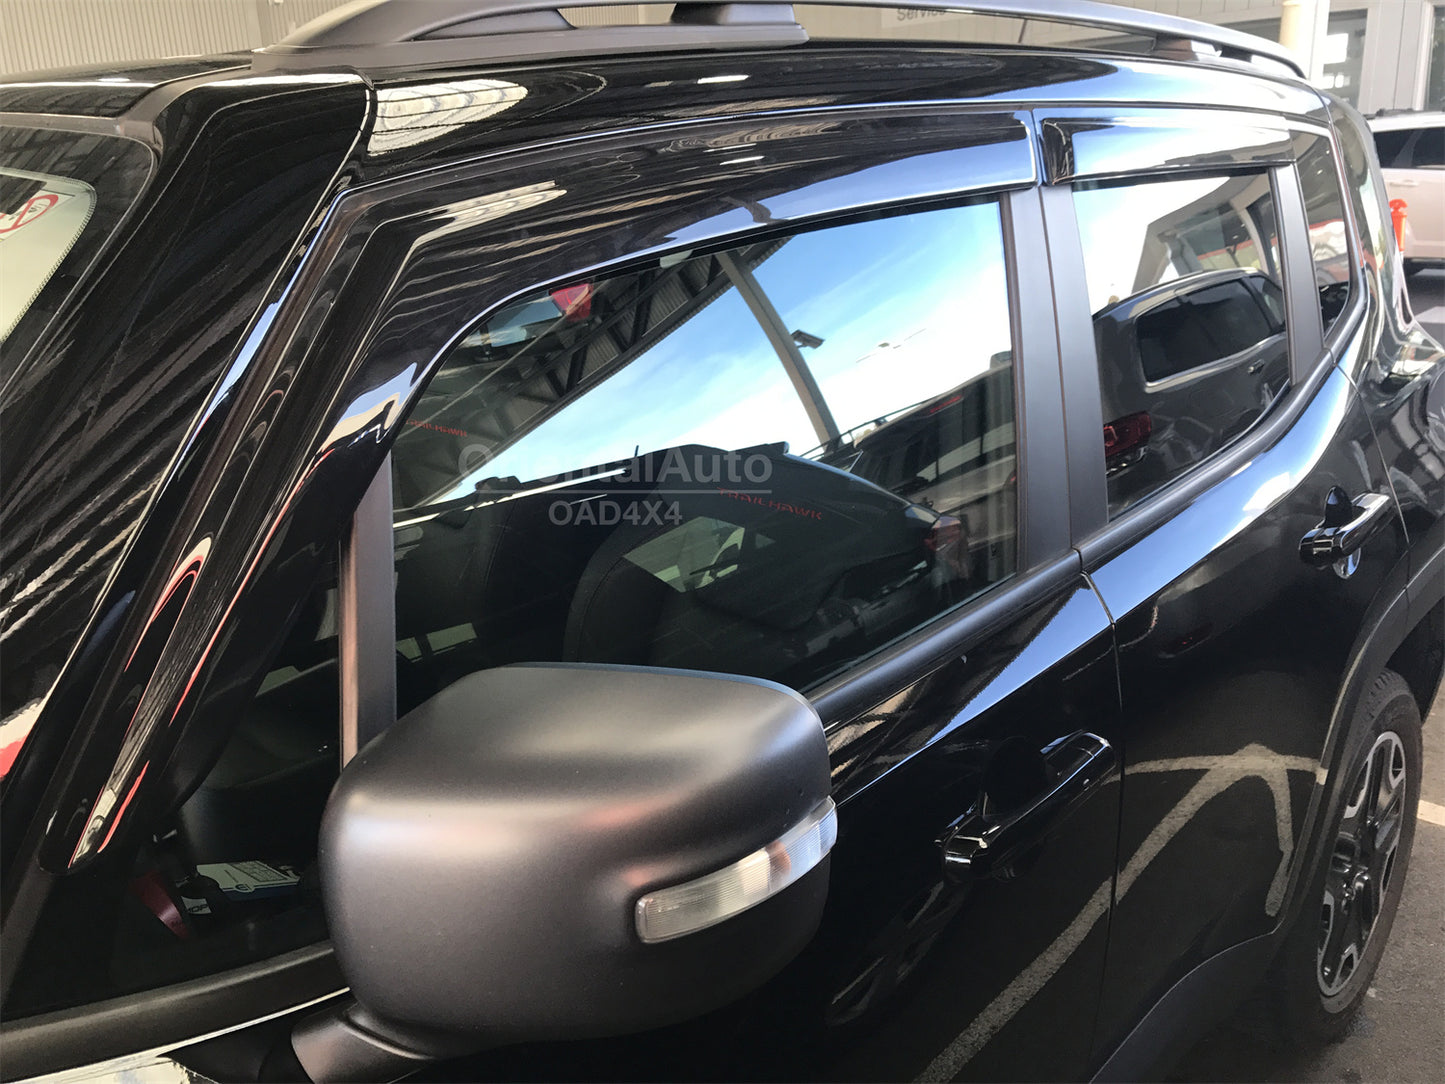 Luxury Weathershields Weather Shields Window Visor For Jeep Renegade 2015+